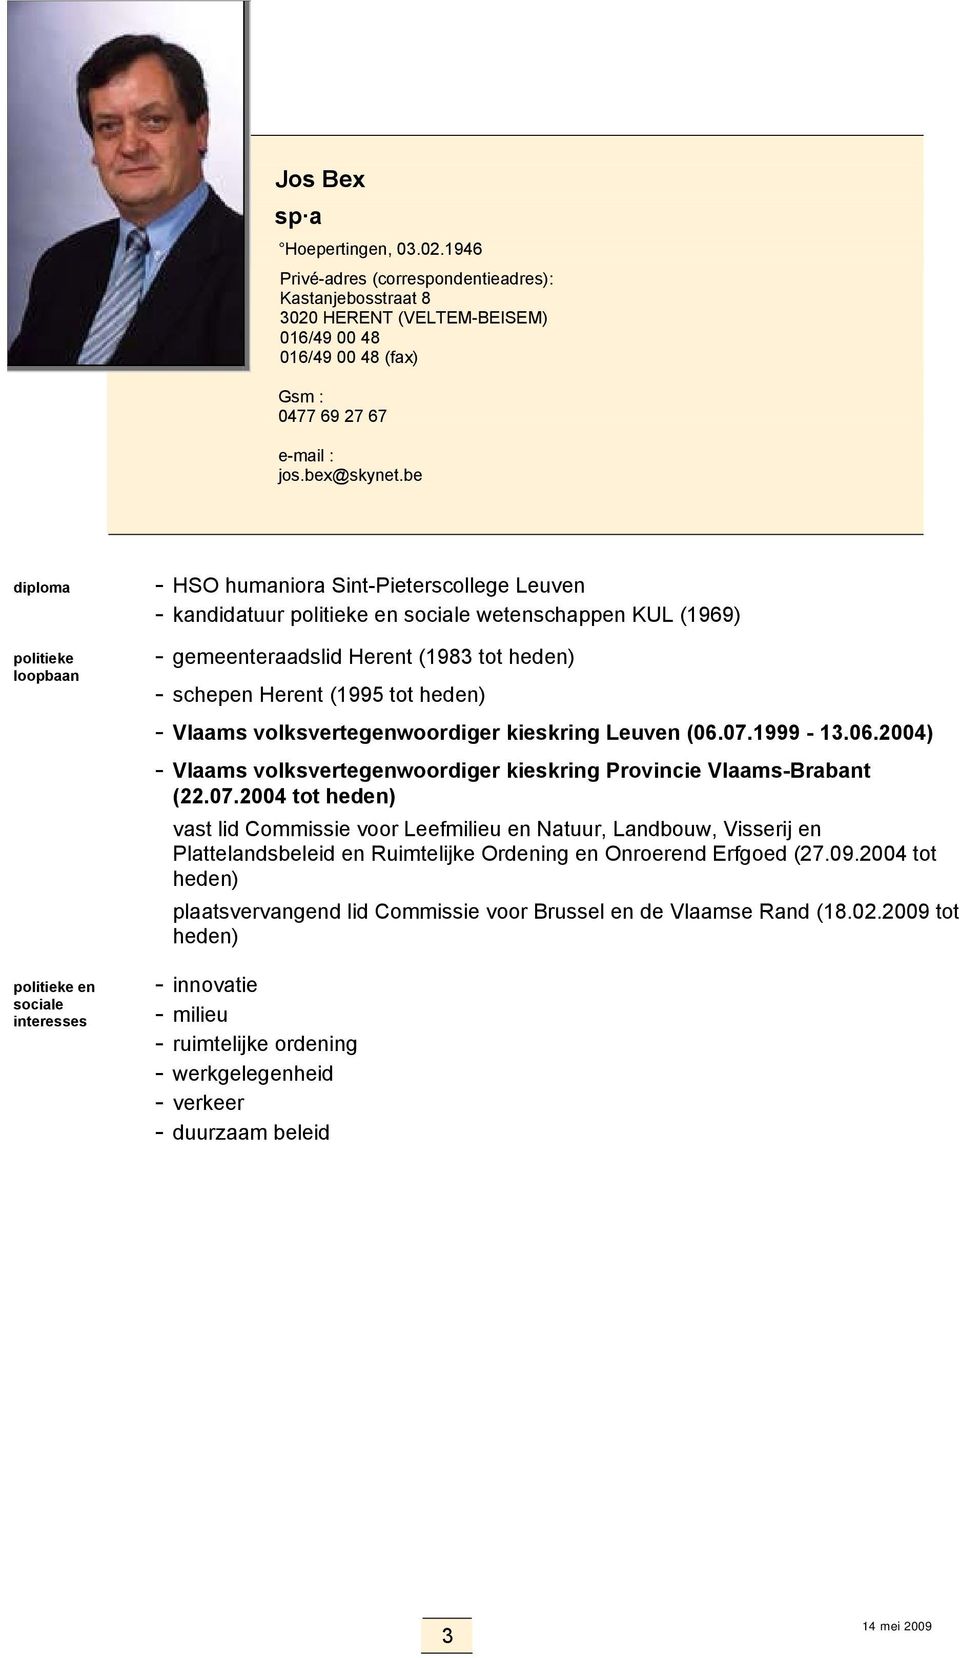 kieskring Leuven (06.07.1999-13.06.2004) - Vlaams volksvertegenwoordiger kieskring Provincie Vlaams-Brabant (22.07.2004 tot vast lid Commissie voor Leefmilieu en Natuur, Landbouw, Visserij en Plattelandsbeleid en Ruimtelijke Ordening en Onroerend Erfgoed (27.